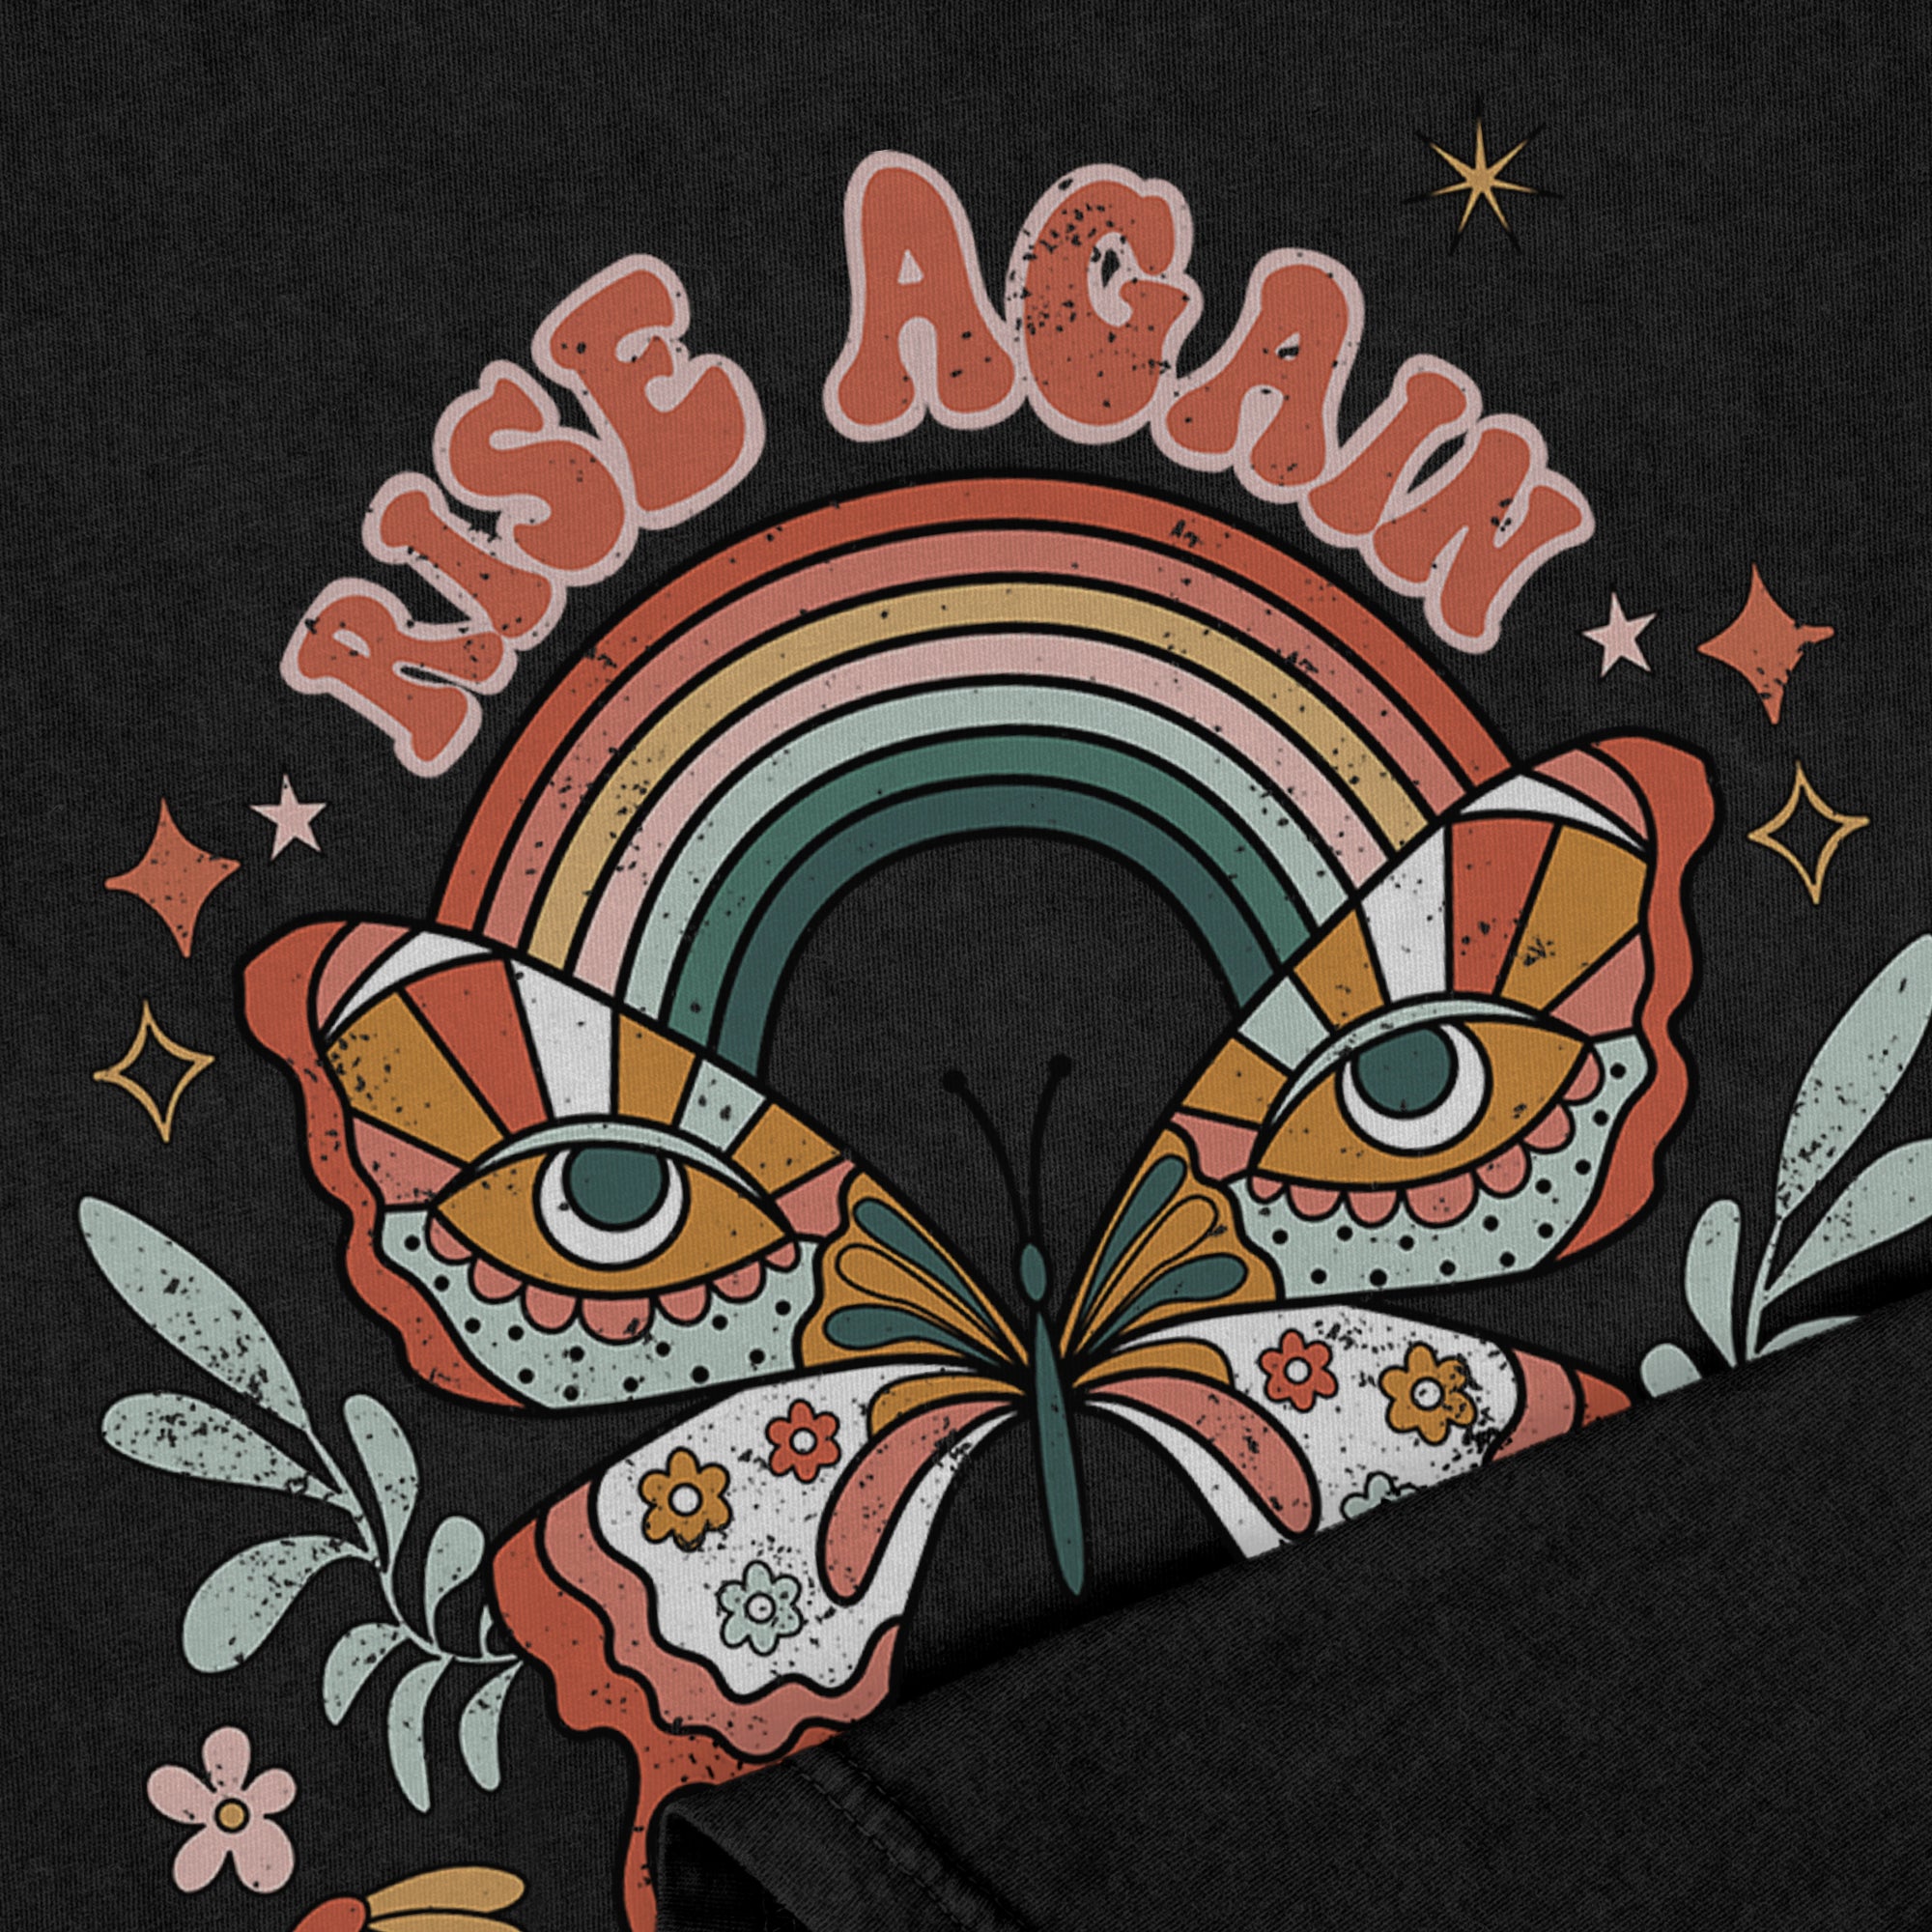 Rise Again Oversized Shirt for Women & Men Garment-Dyed Graphic Tee